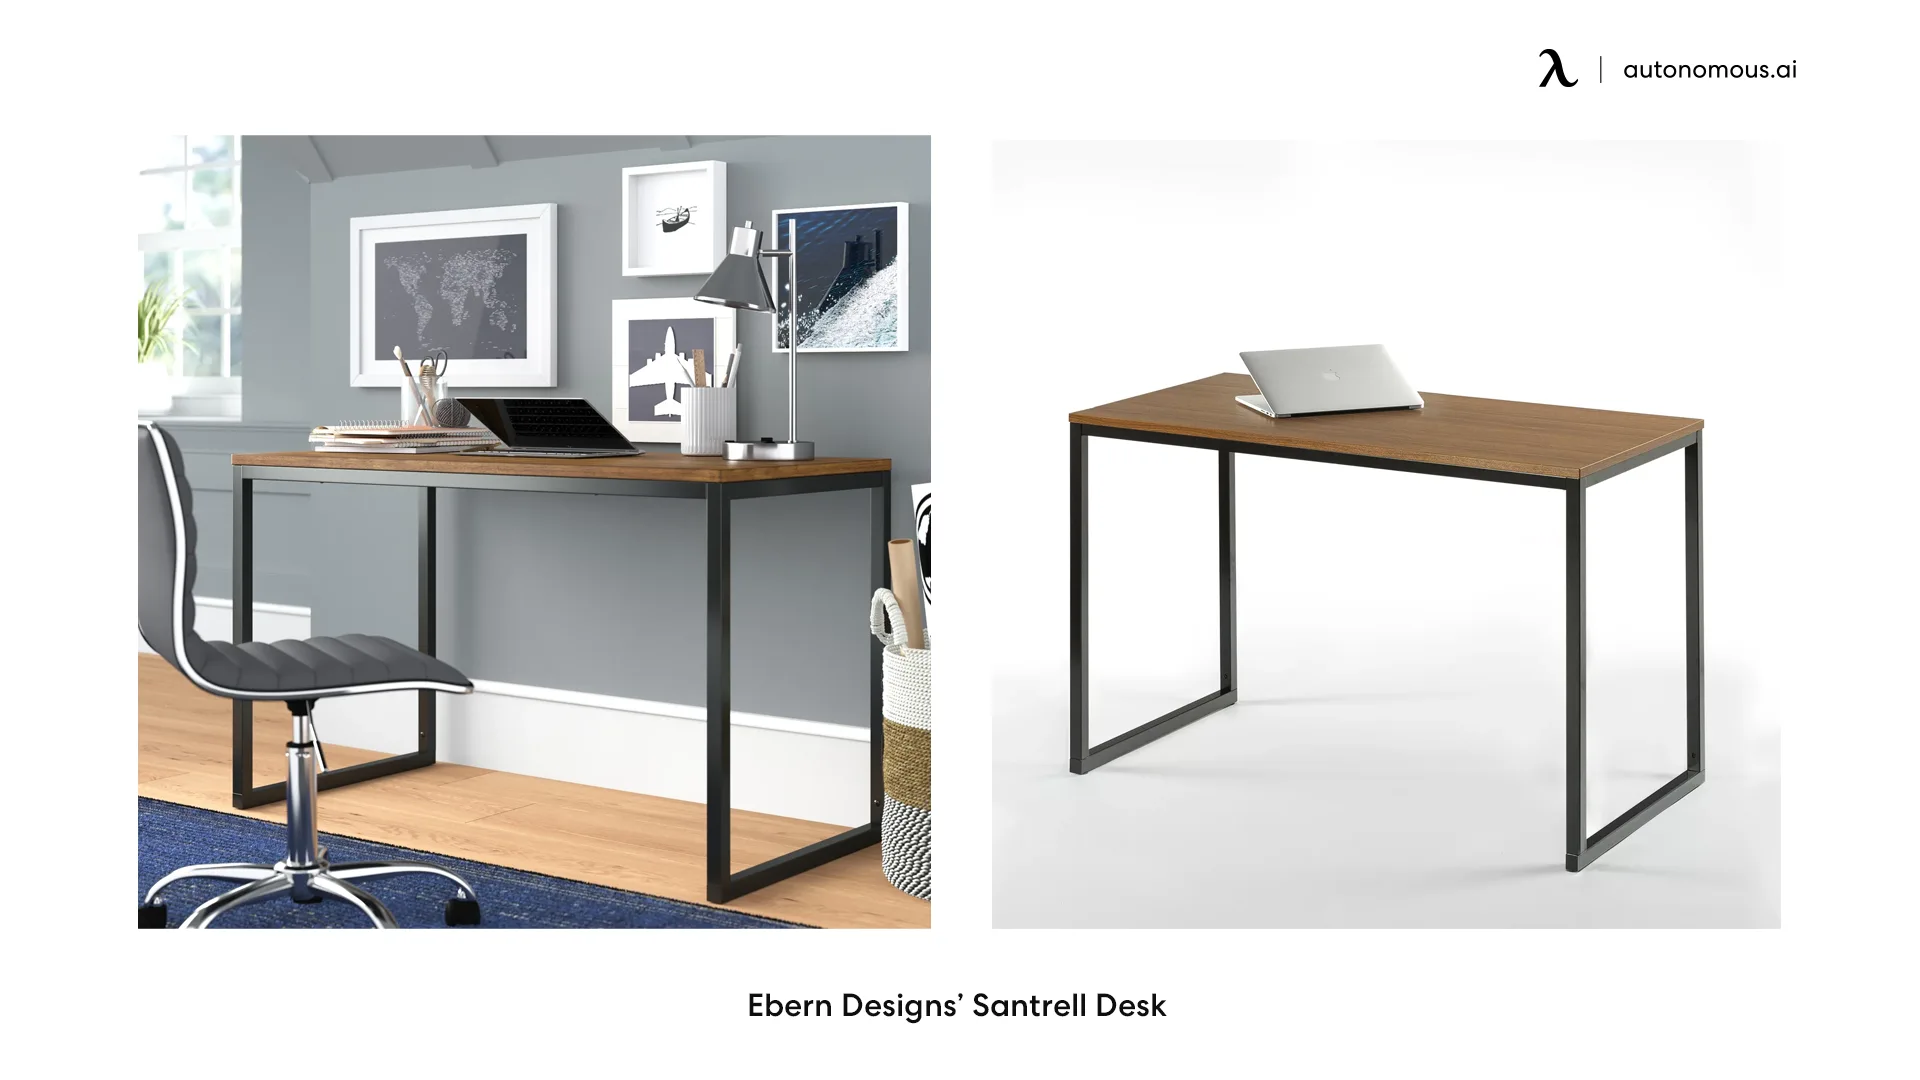 Ebern Designs’ Santrell teacher desk